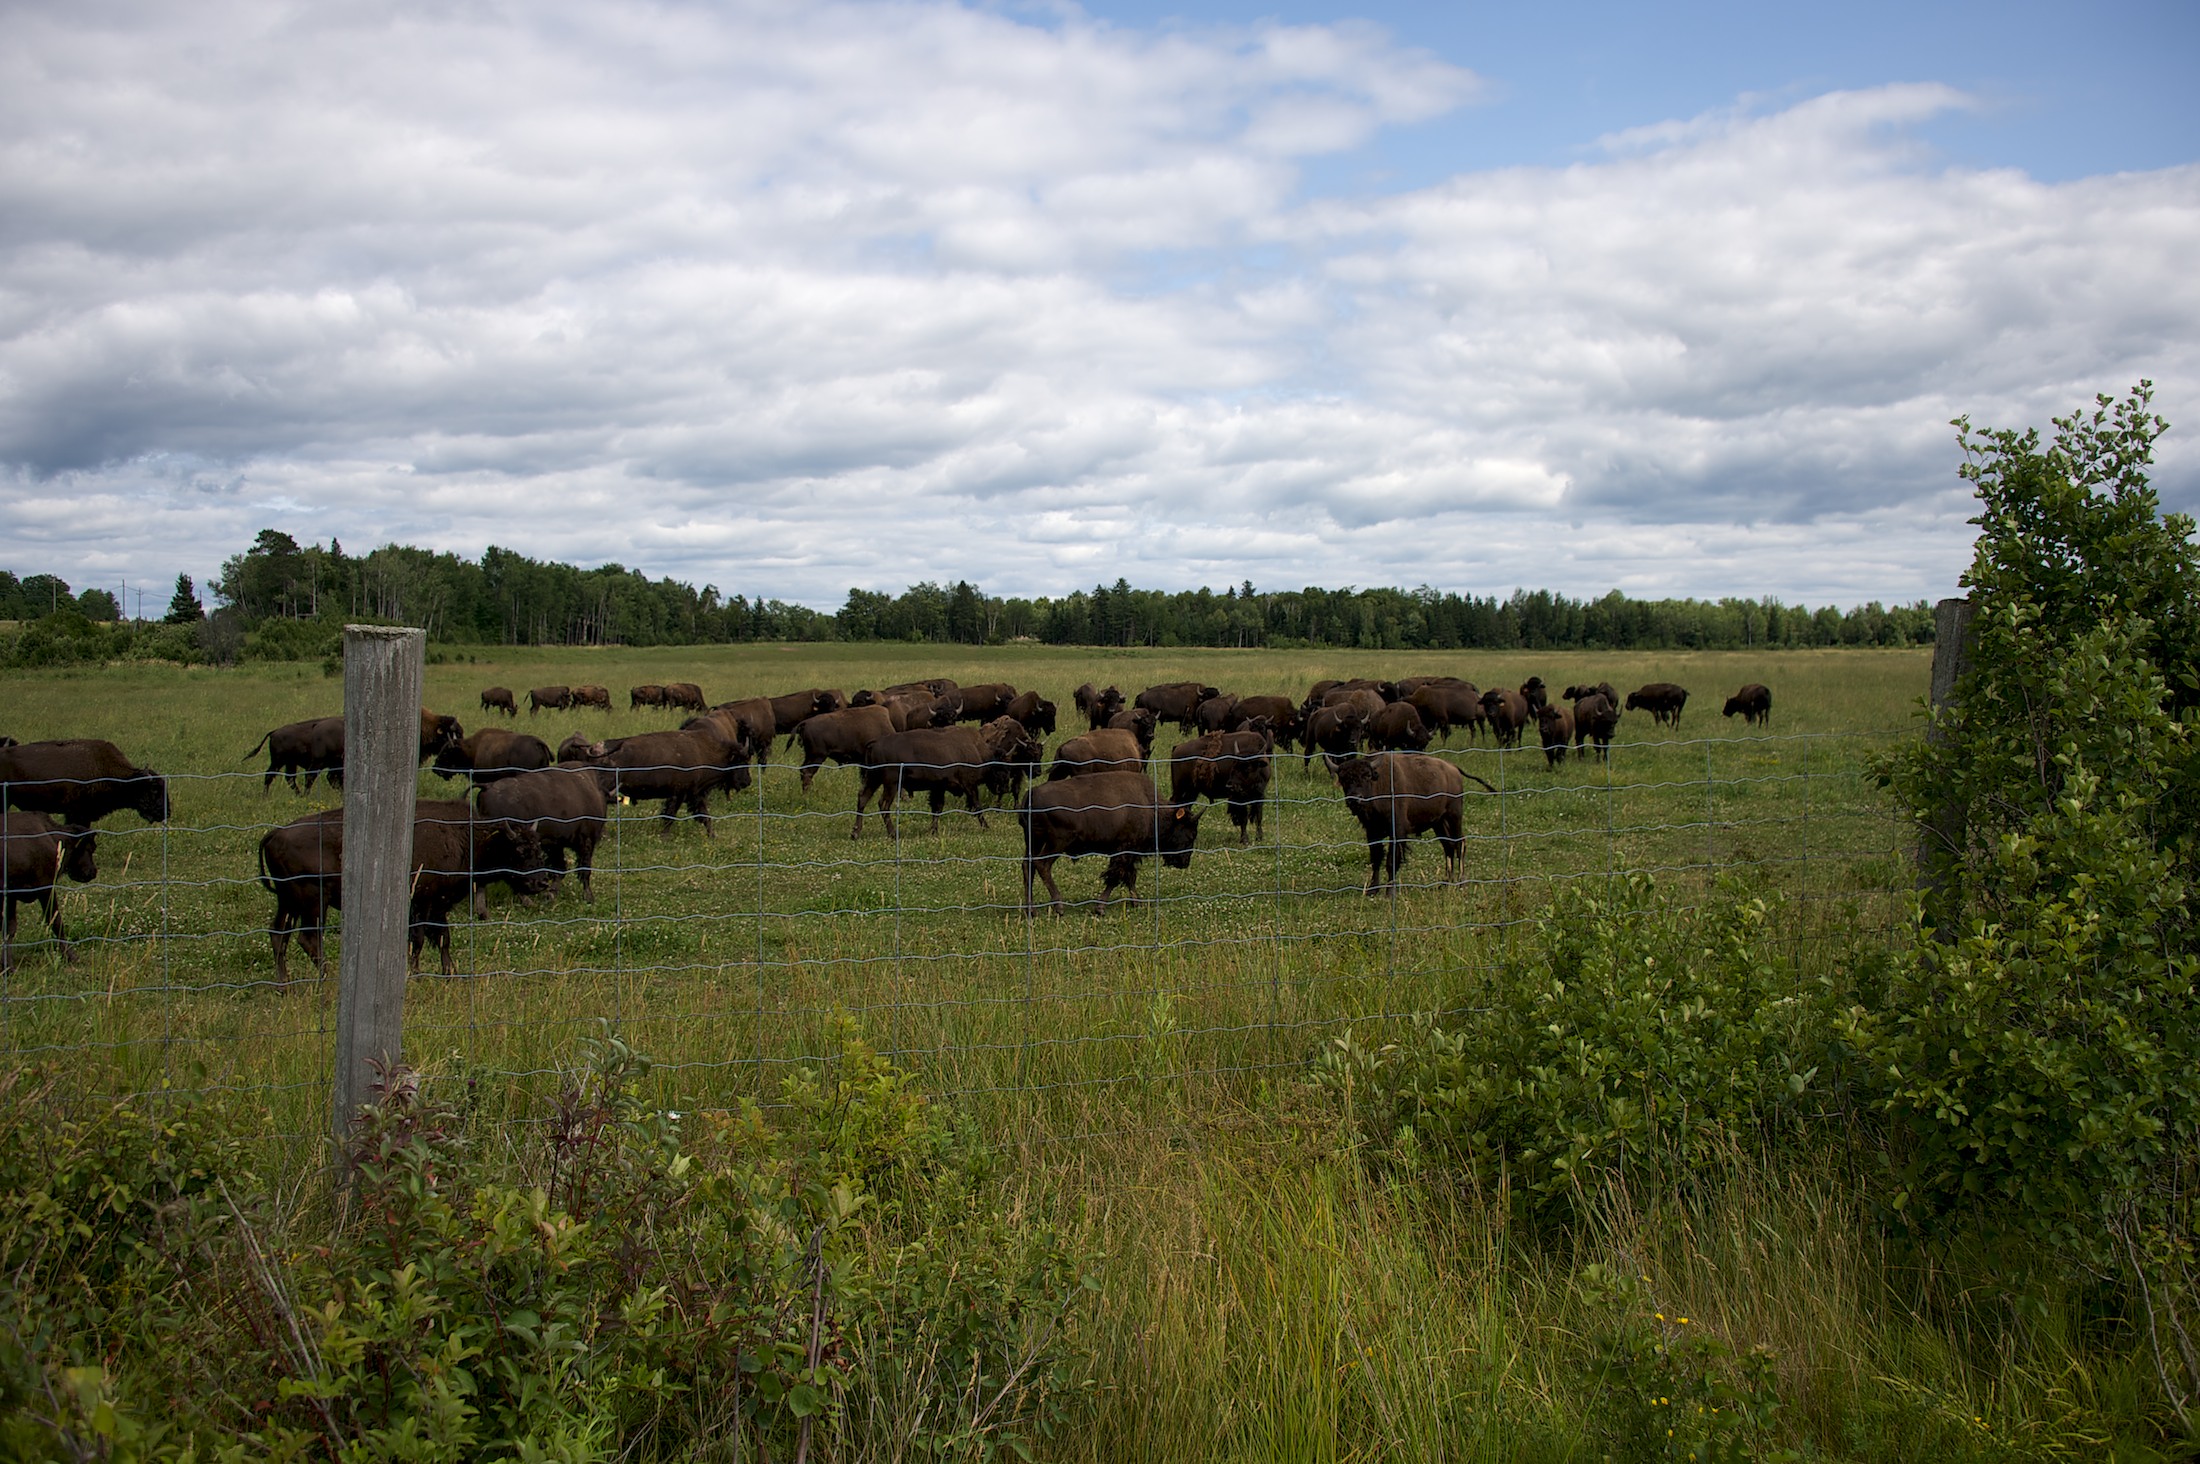 Commercial bison herd outside Sault Ste Marie